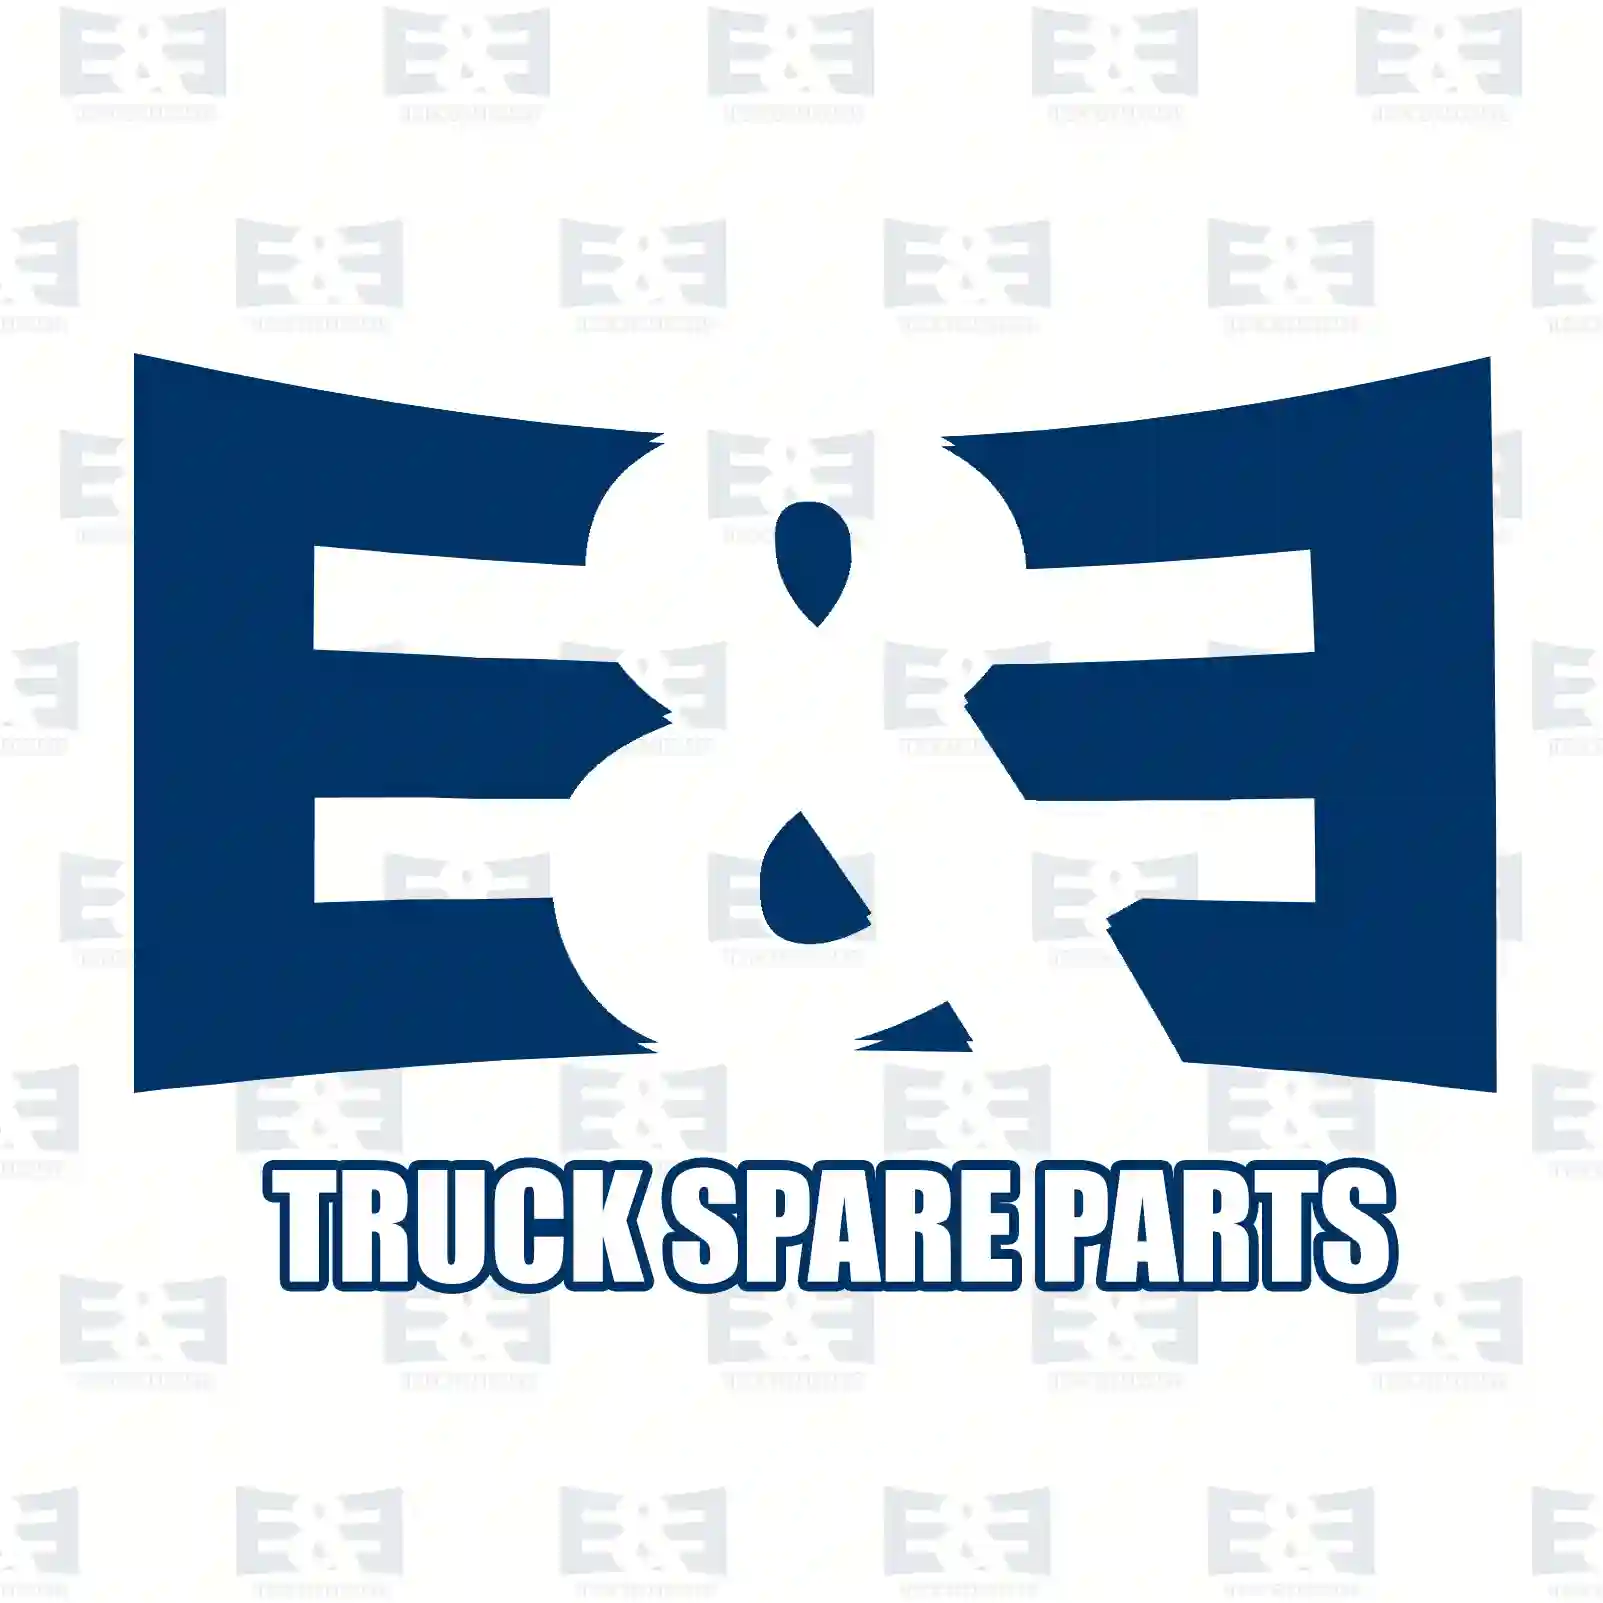 Brake shoe bushing, 2E2296019, 3354230150, 3634230150, 3634230250, ||  2E2296019 E&E Truck Spare Parts | Truck Spare Parts, Auotomotive Spare Parts Brake shoe bushing, 2E2296019, 3354230150, 3634230150, 3634230250, ||  2E2296019 E&E Truck Spare Parts | Truck Spare Parts, Auotomotive Spare Parts